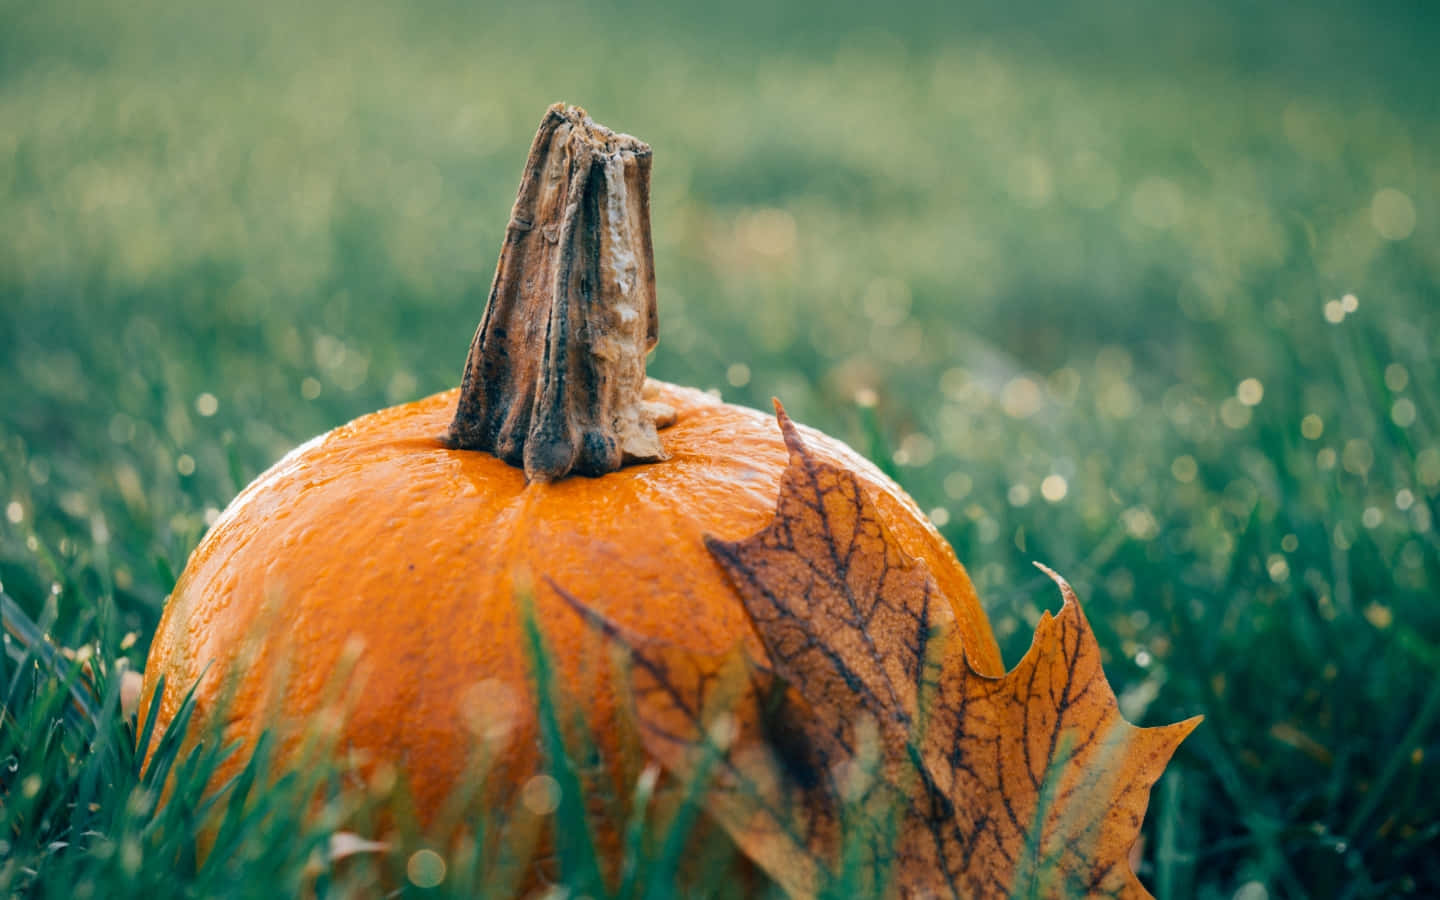 Enchanting Fall Pumpkin Display